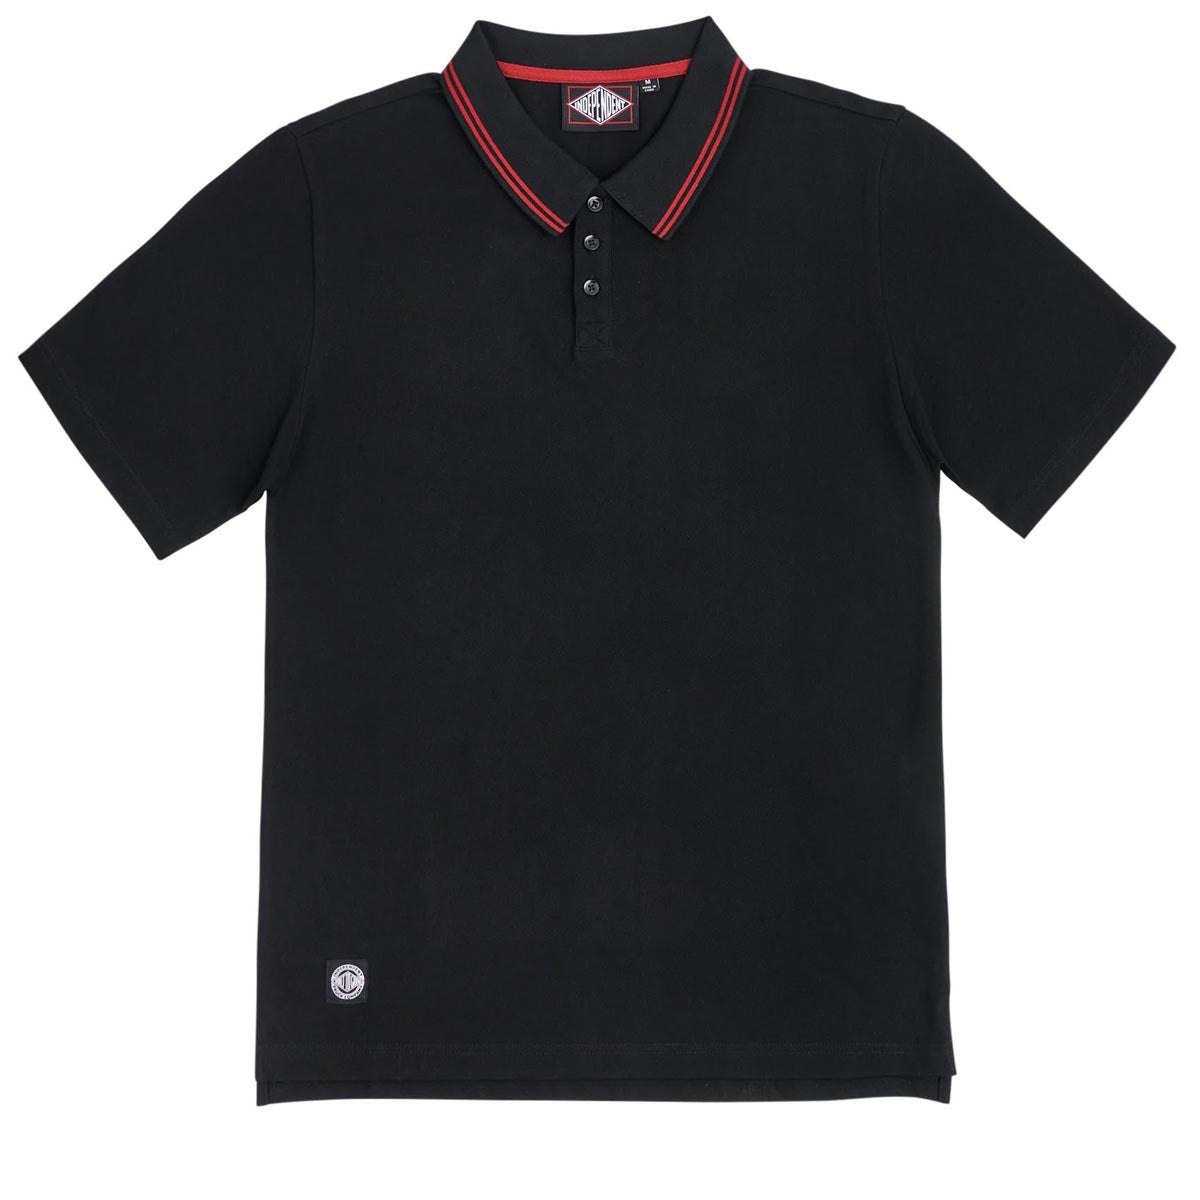 Independent BTG Summit Polo Shirt - Black image 1